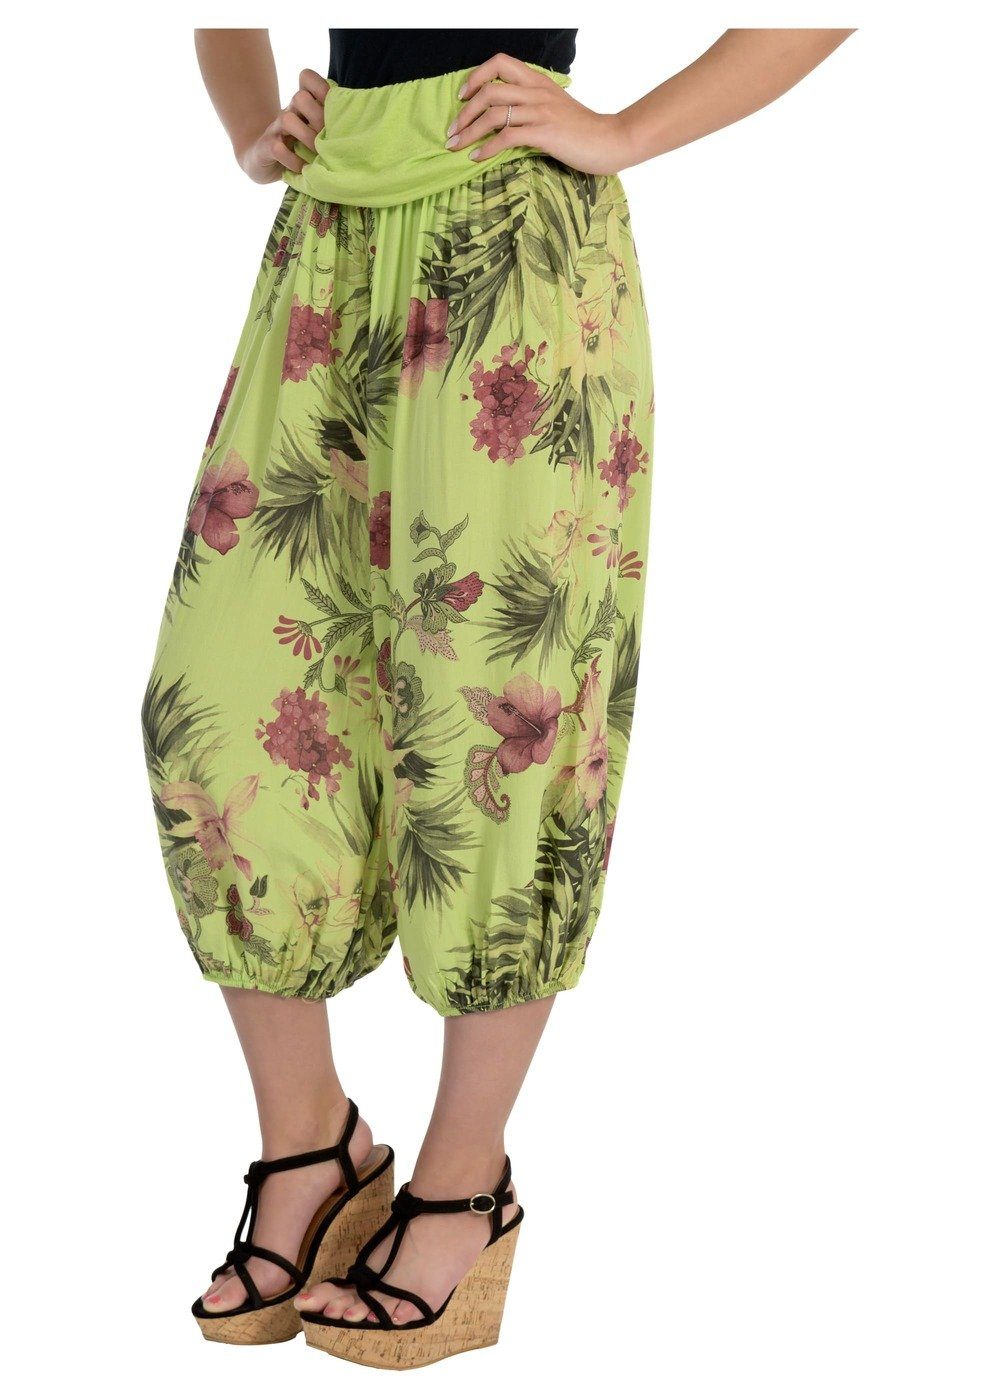 Einheitsgröße more Aladinhose hellgrün floralem mit malito 8938 than Haremshose Muster fashion